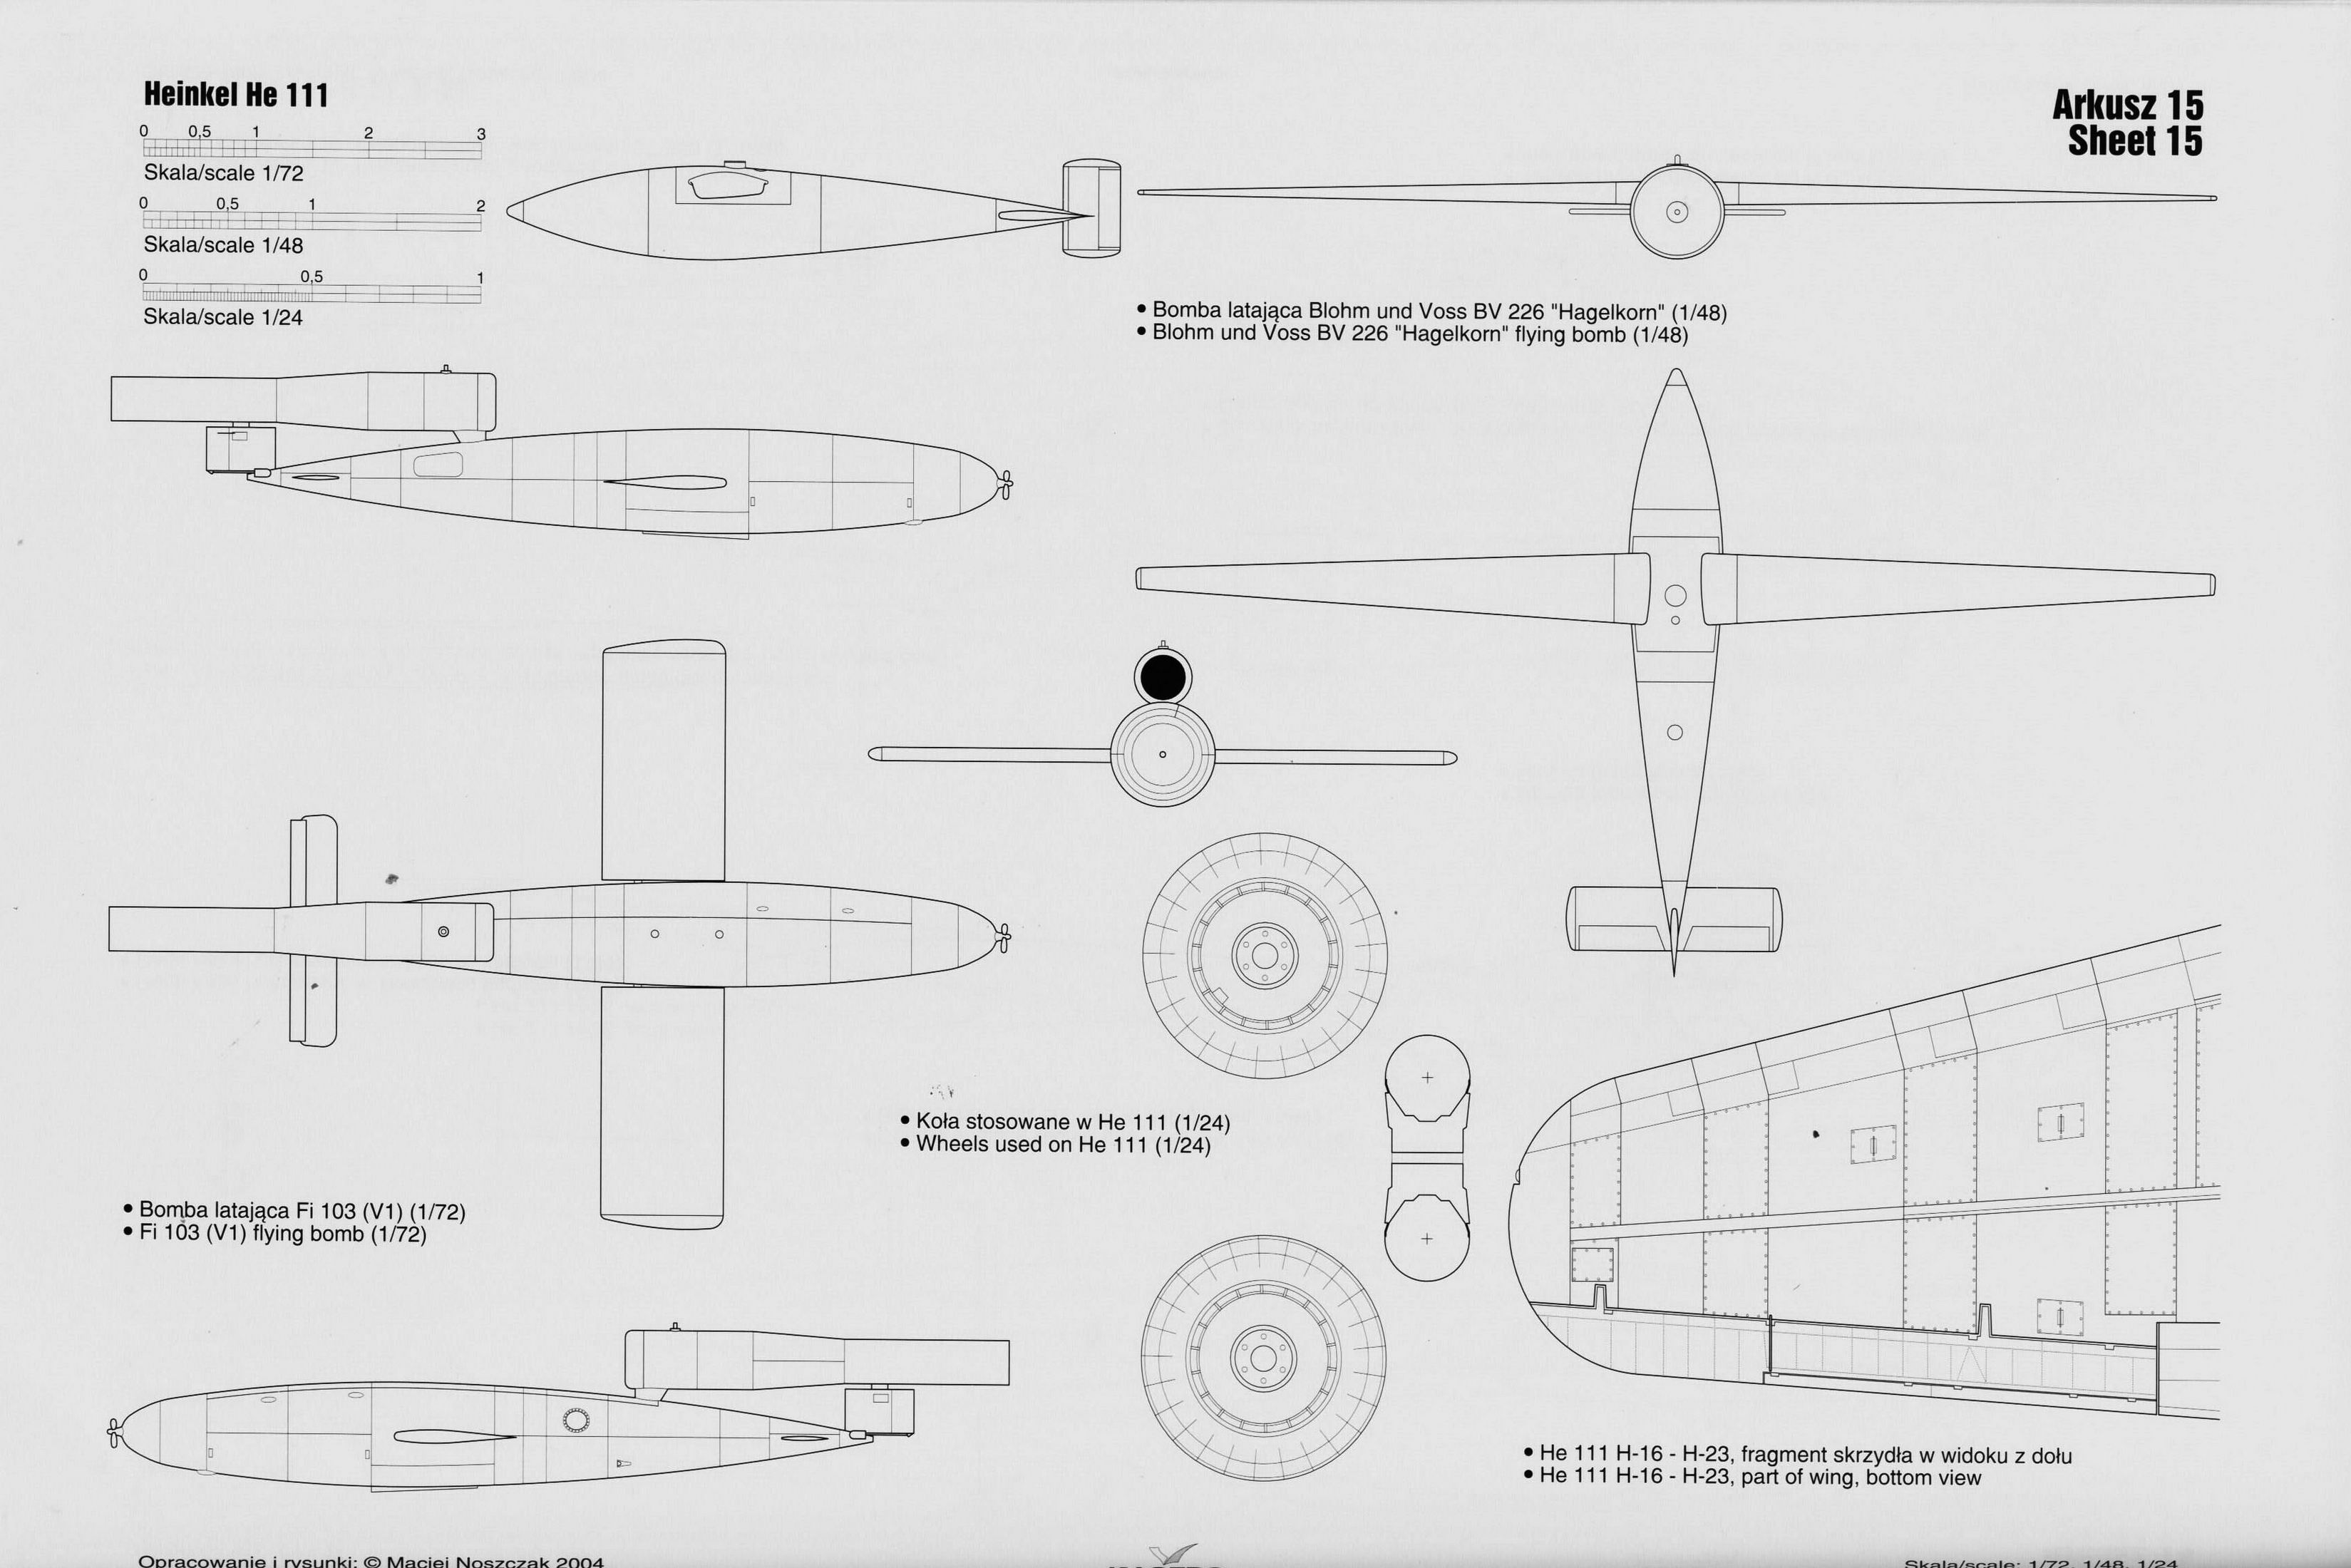 Artwork line drawing or blue print of a Heinkel He 111H BV 226 flying bomb scale 1 72 Arkusz 01